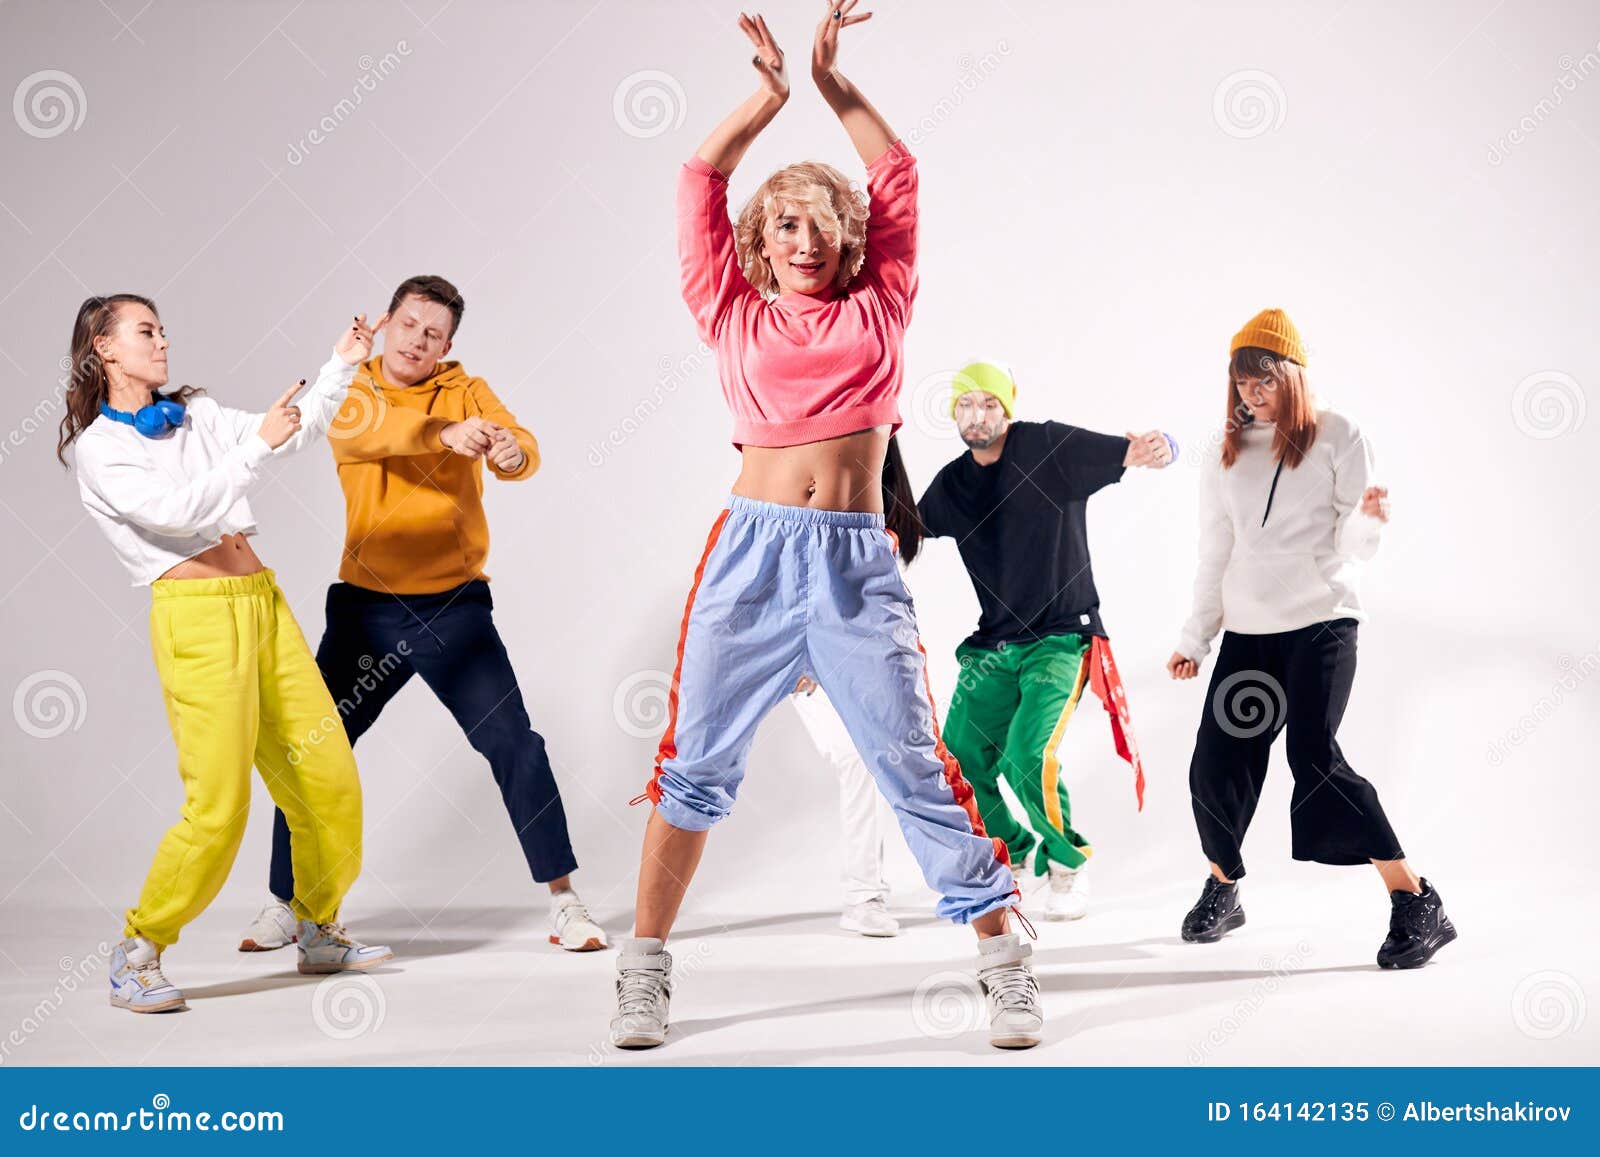 Funny Men and Women Dancing Hip-hop at Studio Stock Image - Image of  energy, dancer: 164142135